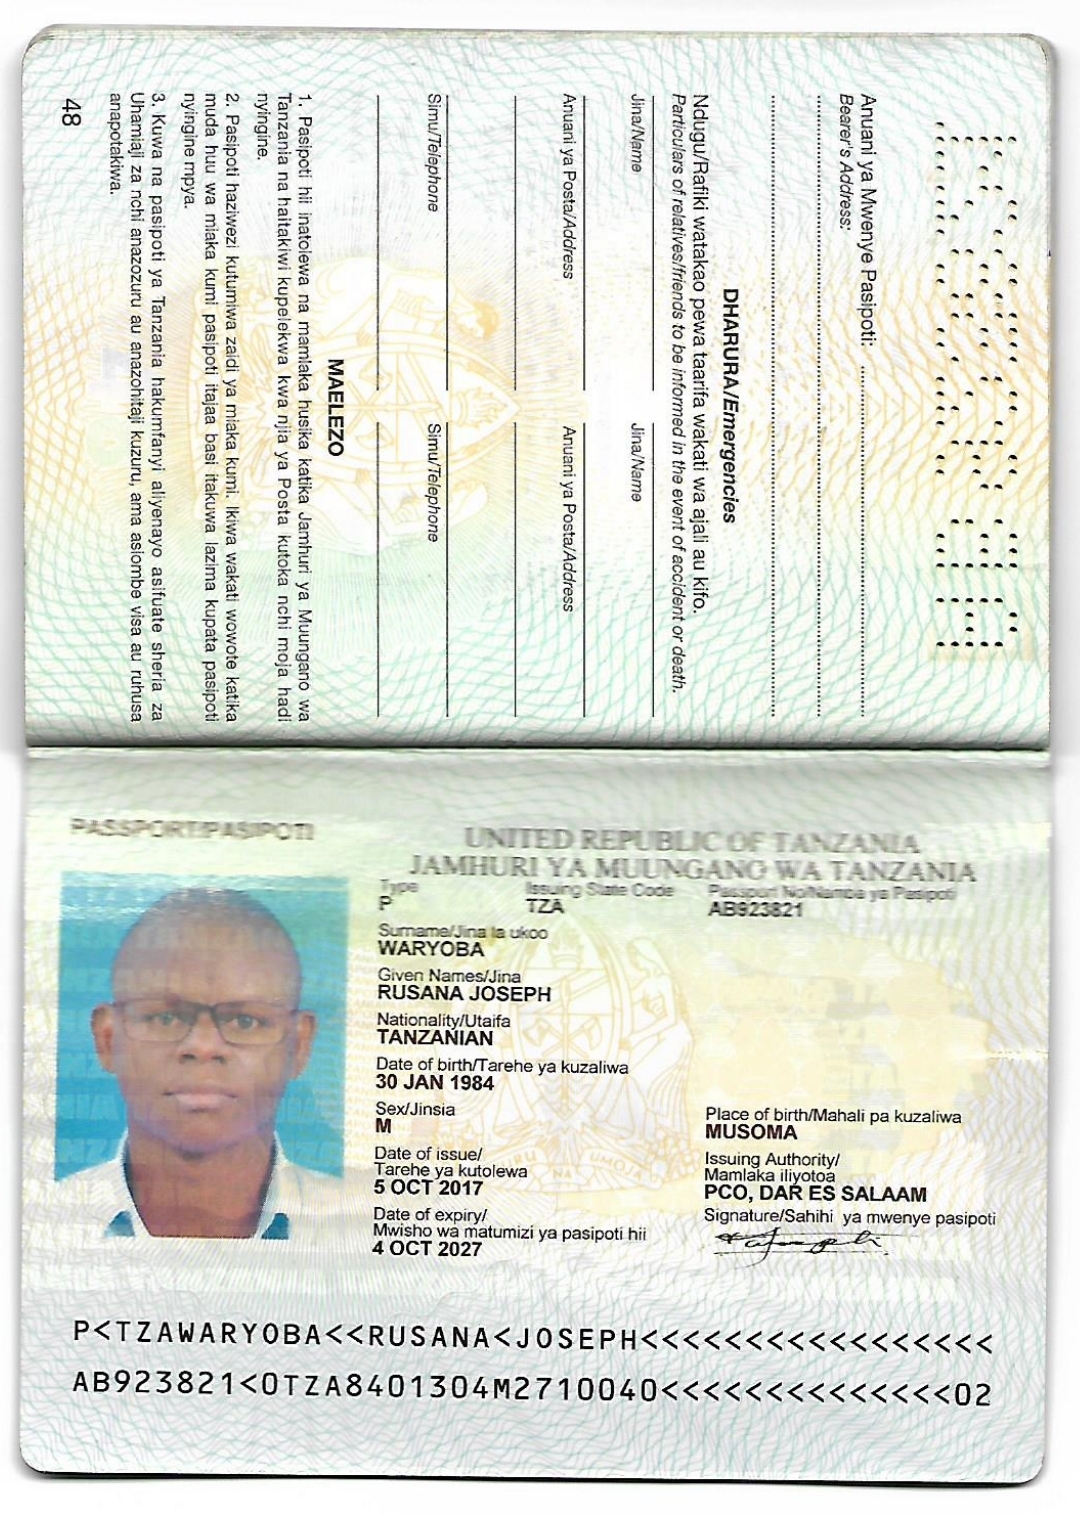 Passport copy of Joseph Waryoba